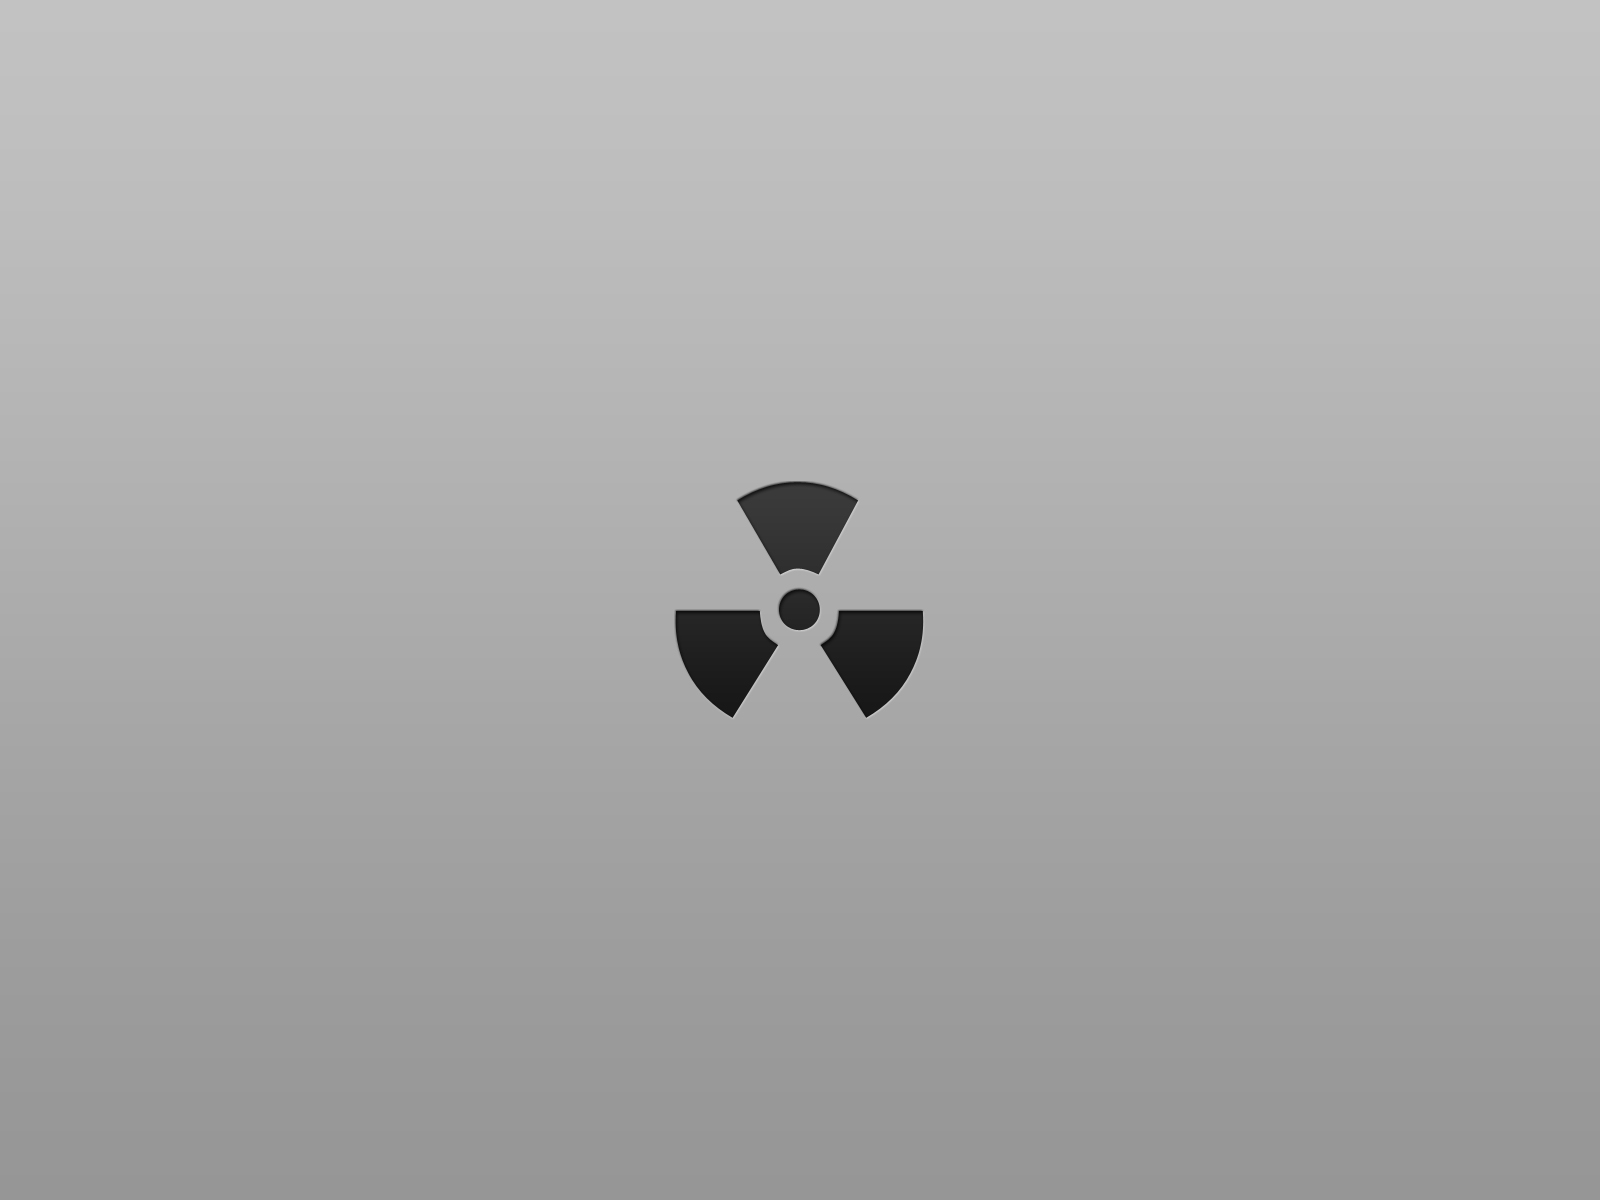 http://2.bp.blogspot.com/-esG2FVmFuwM/TnT-QnqWgEI/AAAAAAAADFg/dlXIzw6LoR4/s1600/Radioactive_Warning_Sign_Minimalistic_HD_Wallpaper_Vvallpaper.Net.jpg